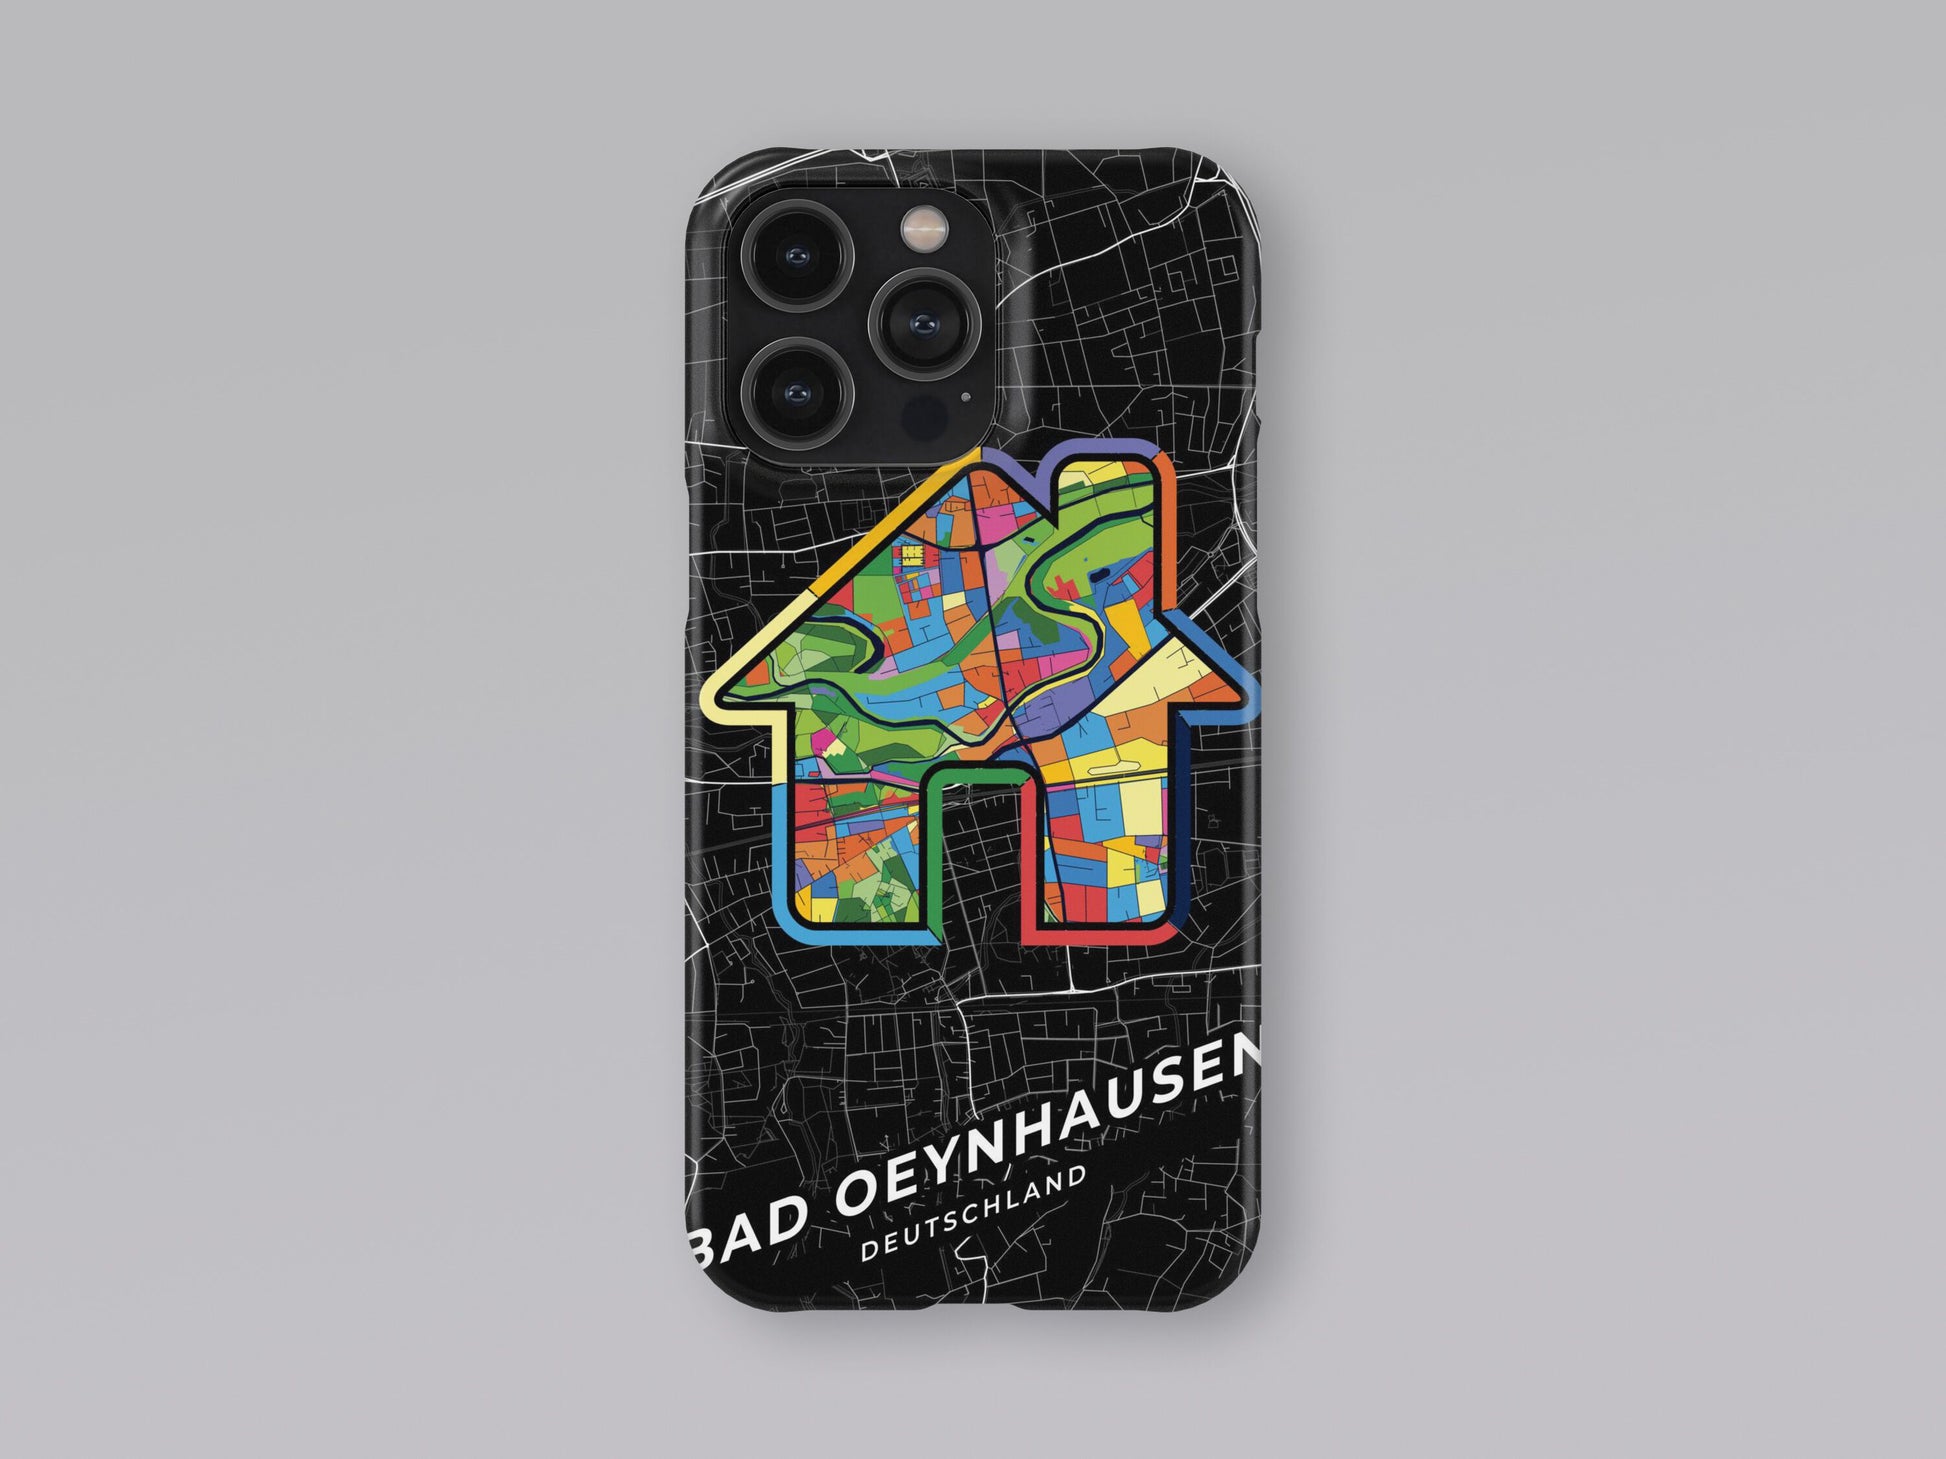 Bad Oeynhausen Deutschland slim phone case with colorful icon. Birthday, wedding or housewarming gift. Couple match cases. 3